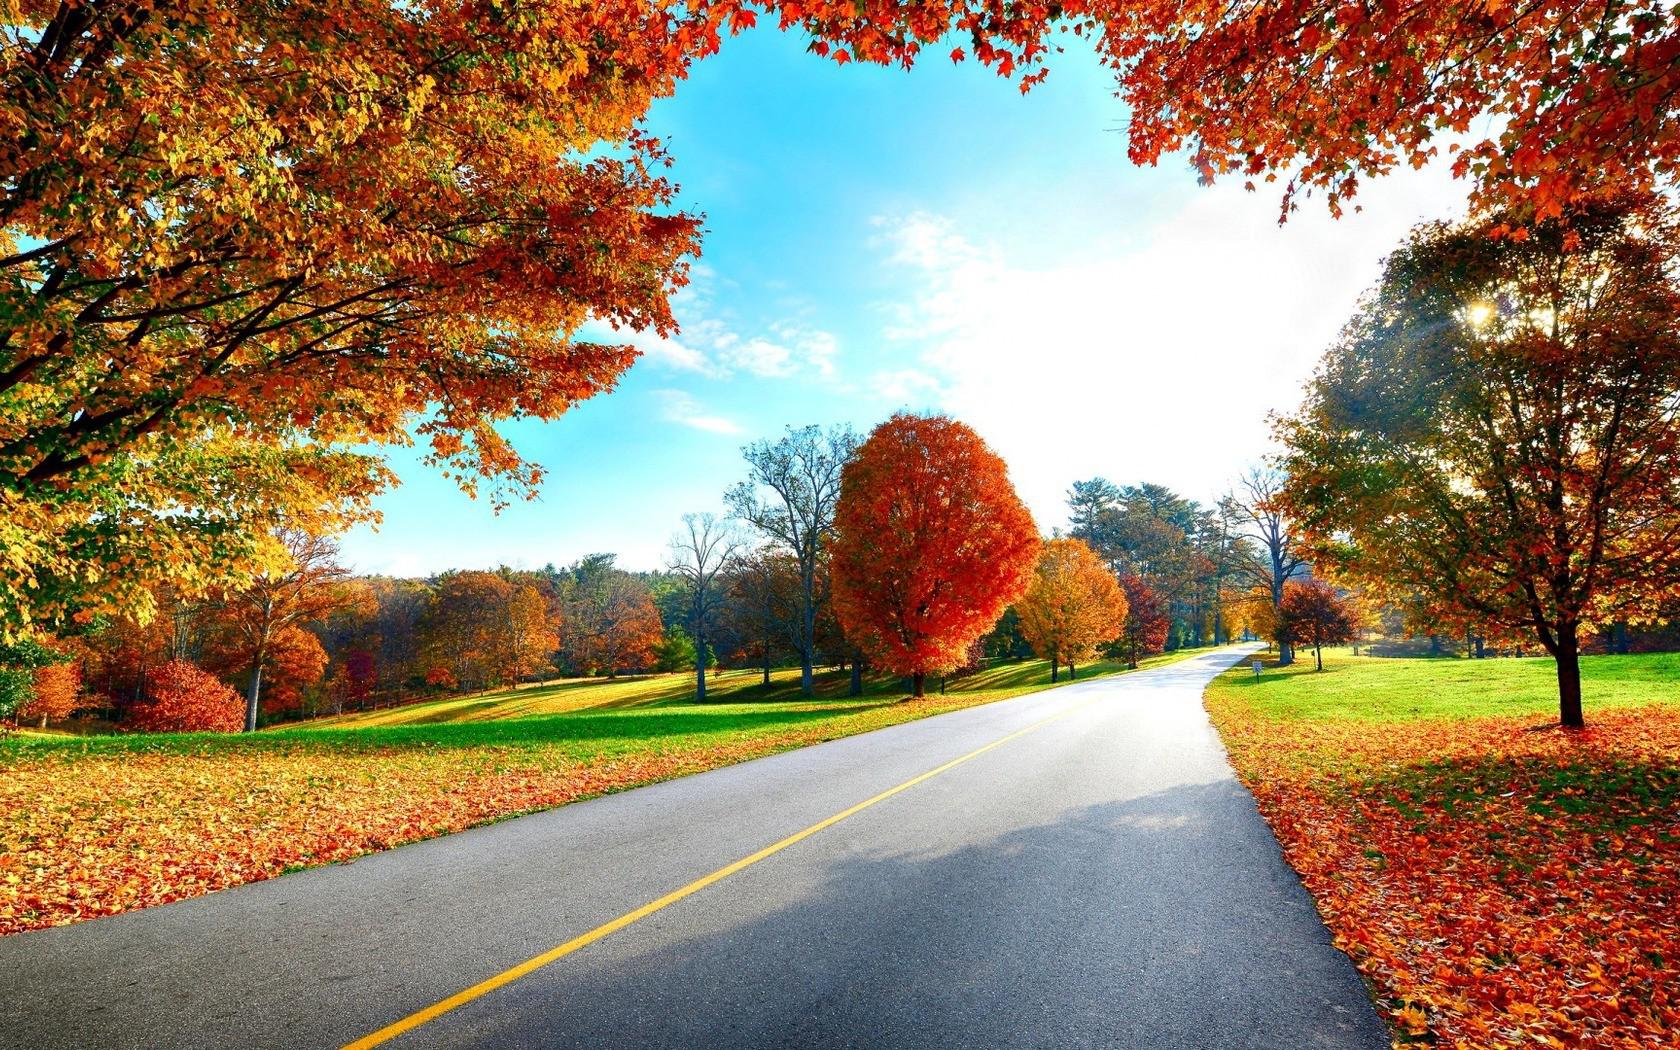 Hd Landscapes Nature Trees Autumn Background Picture Wallpaper For Desktop